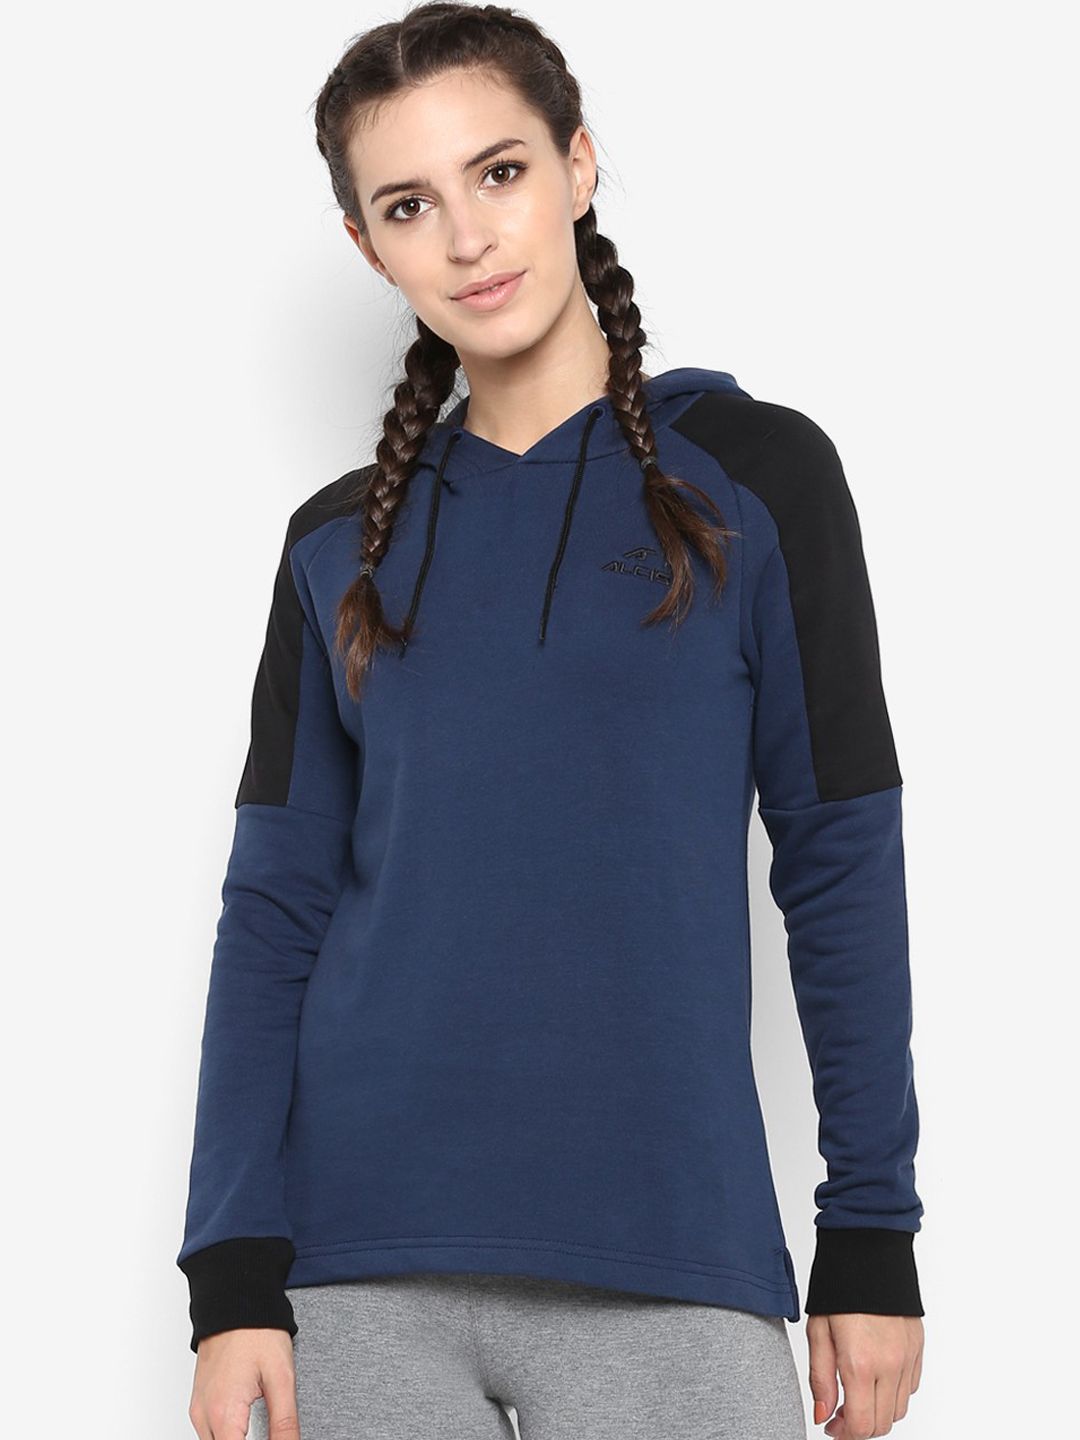 Alcis Women Blue & Black Colourblocked Hooded Sweatshirt Price in India